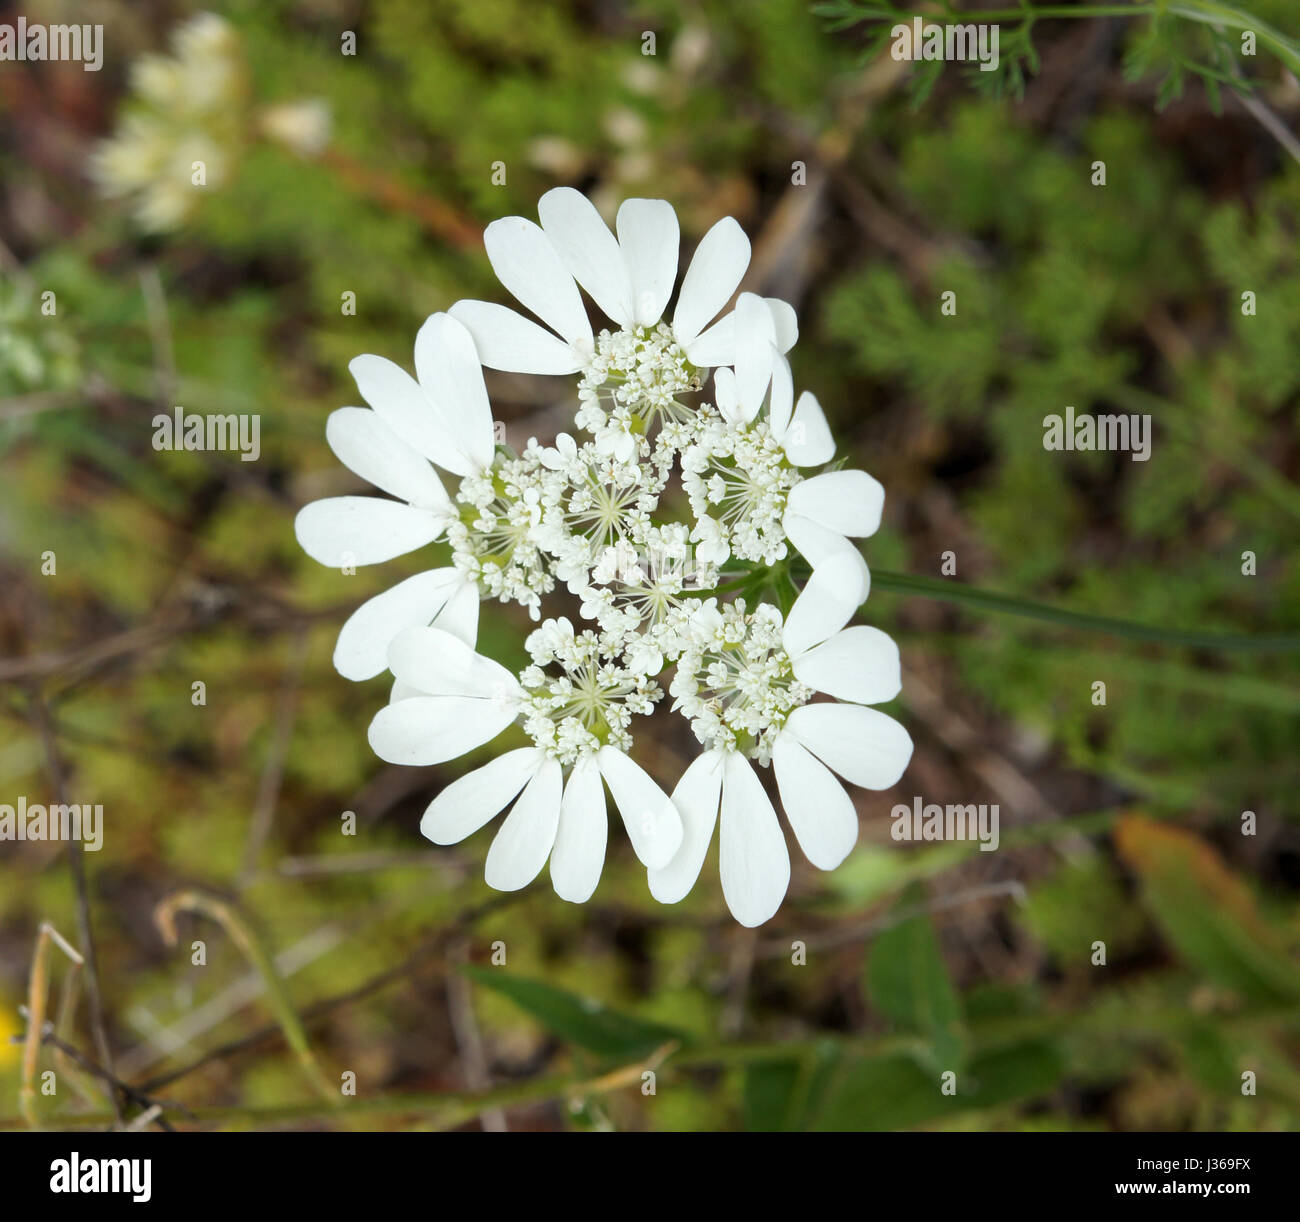 Parsnip plant,White wildflower, Dalmatia, Coatia Stock Photo